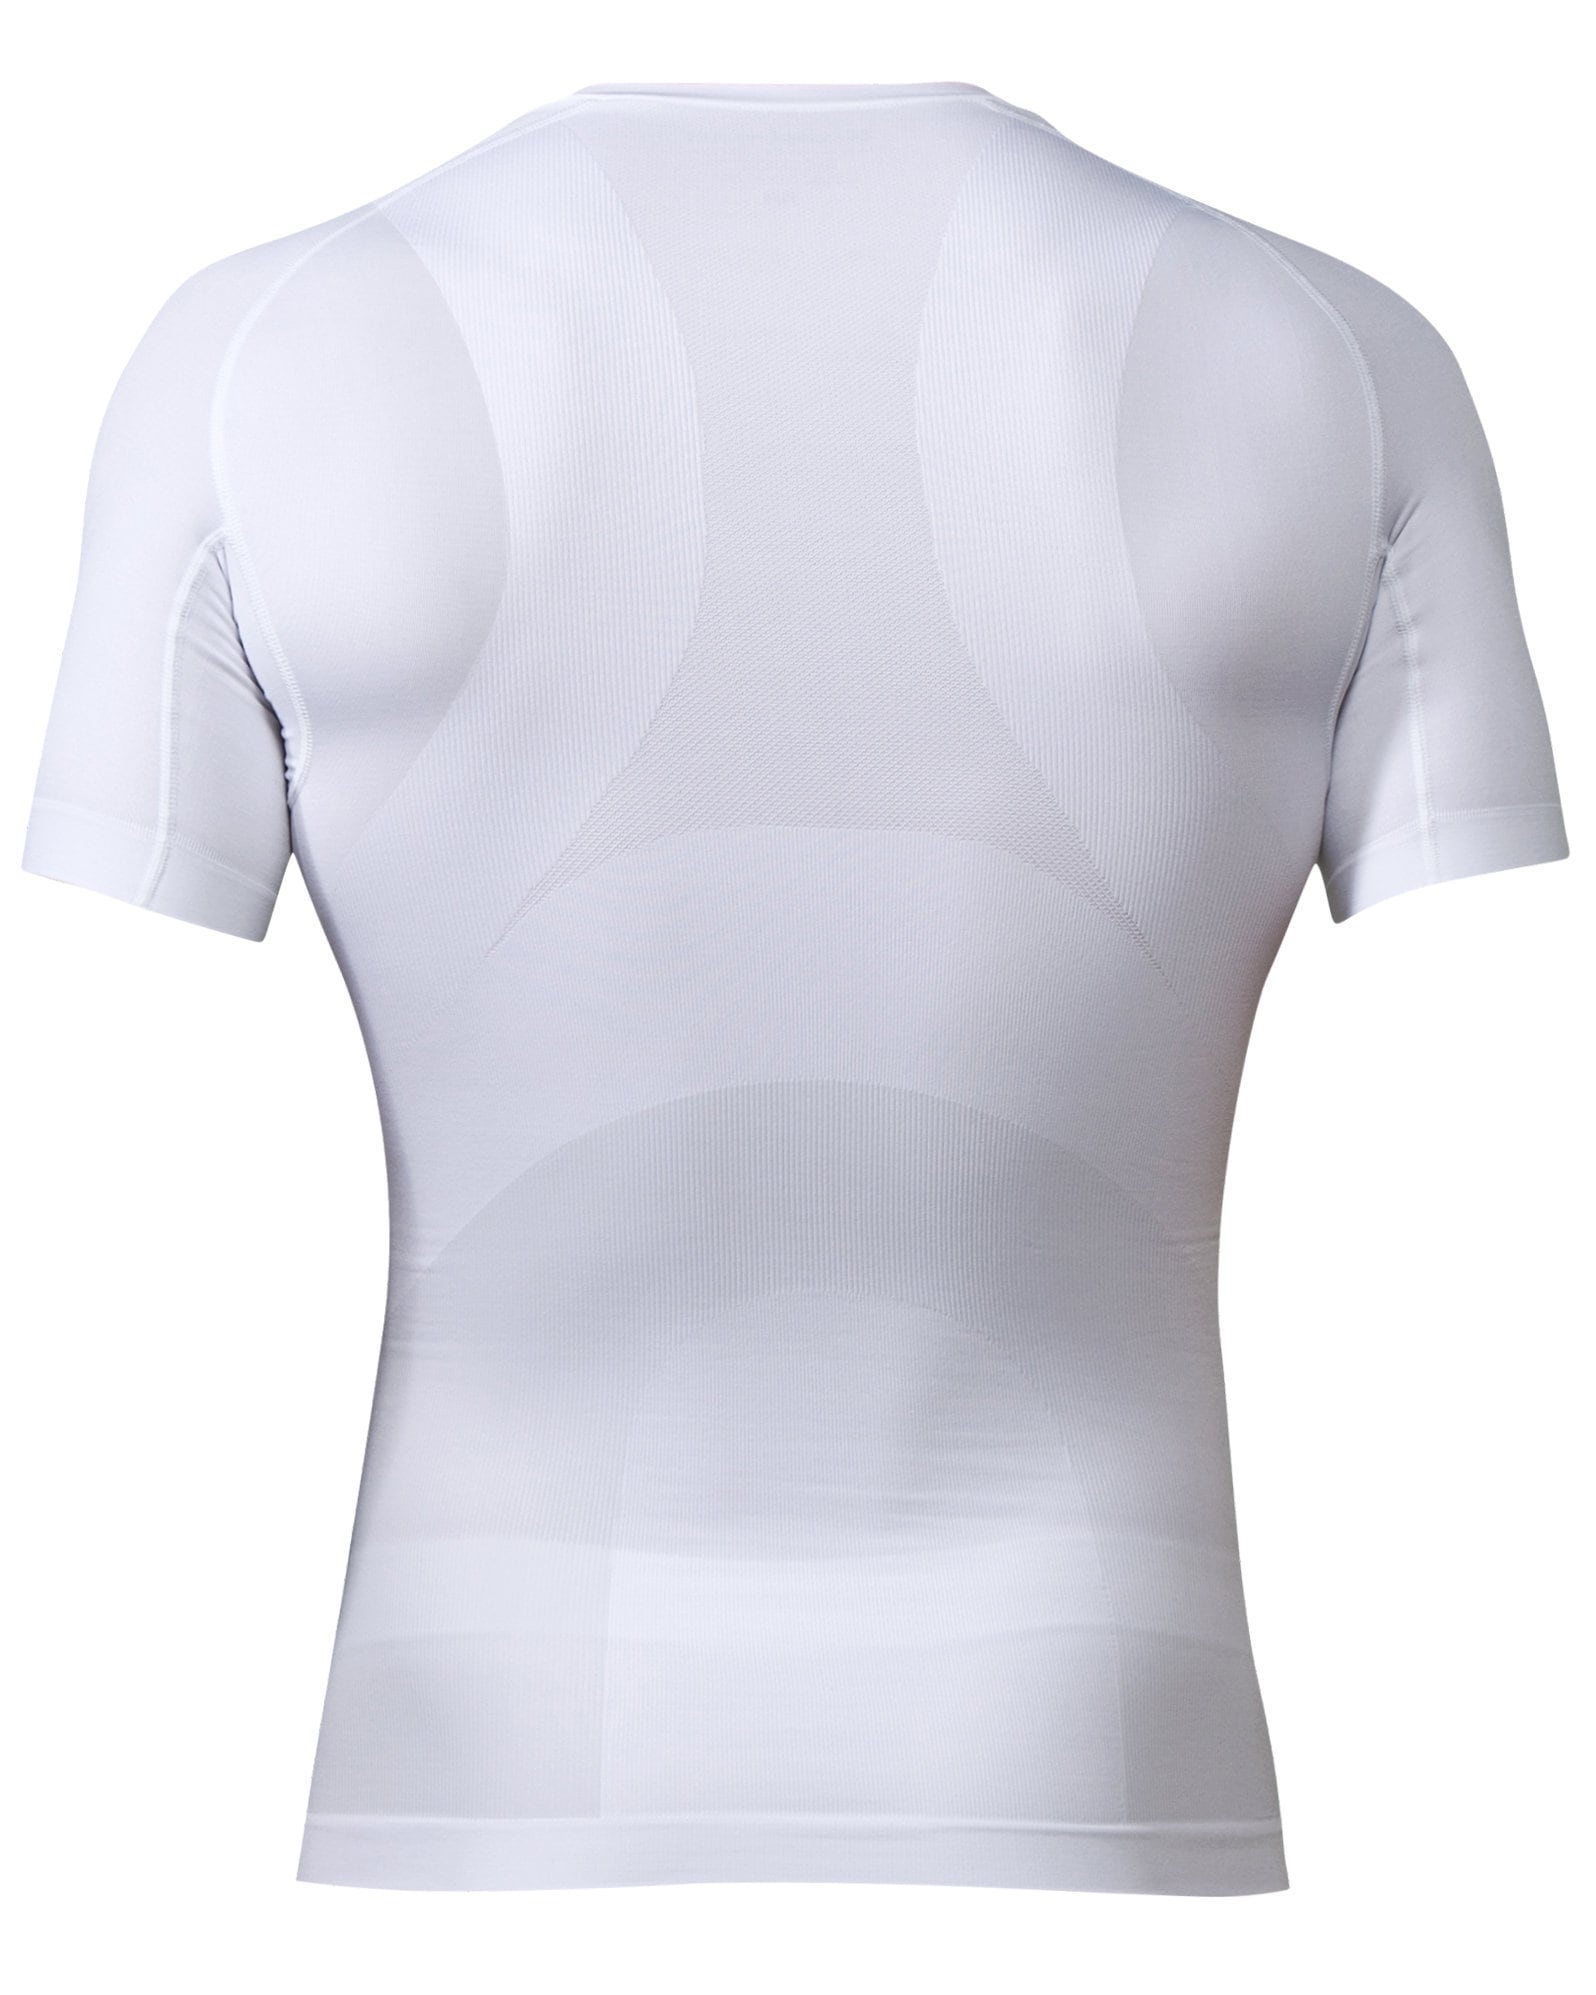 https://www.knapman.eu/product/71-e2g-knapman-mens-compression-shirt-v-neck-white.jpg